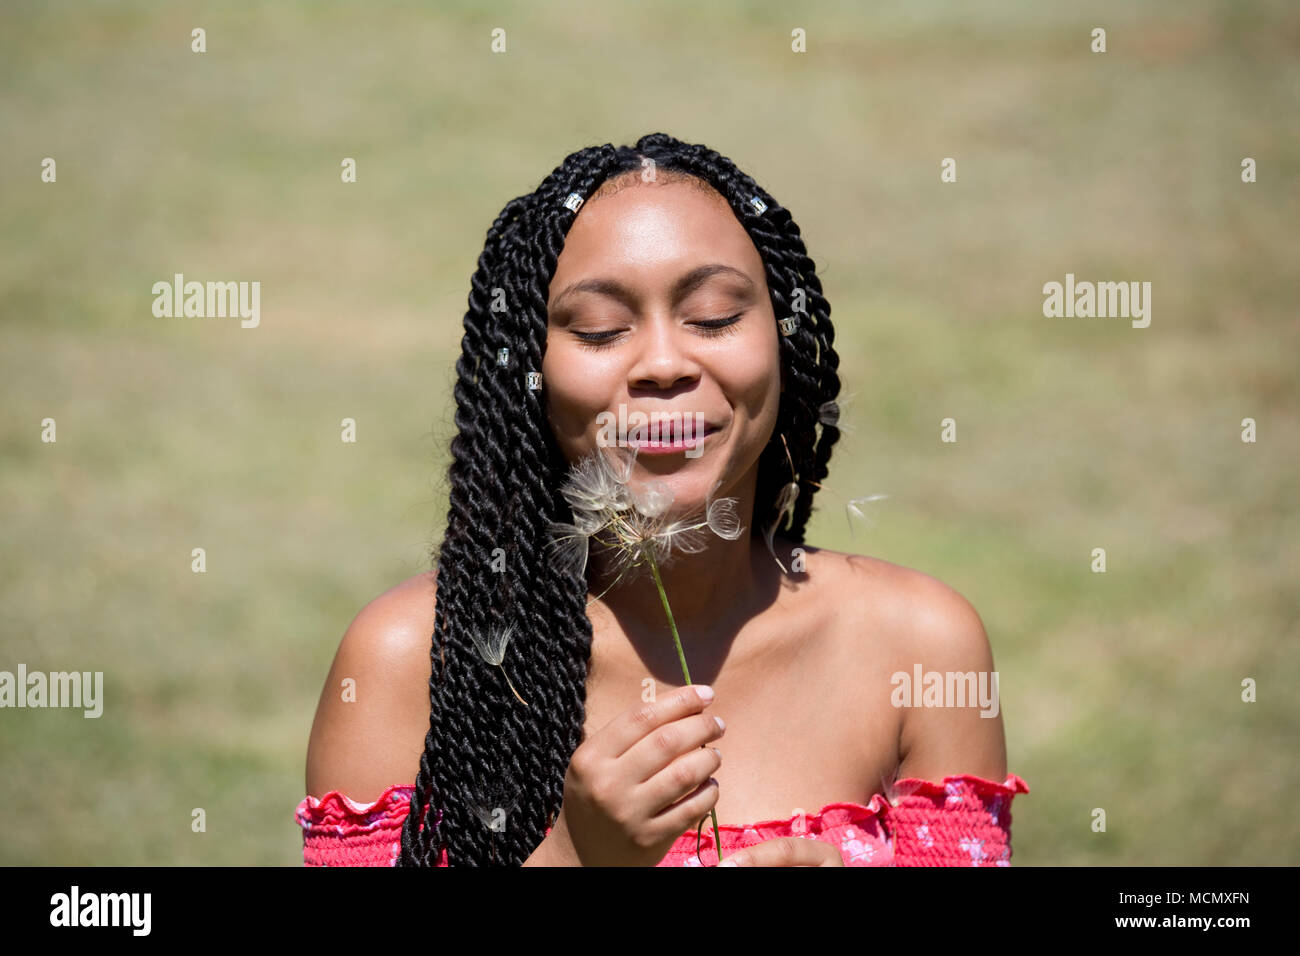 Woman blowing a dandelion Stock Photo